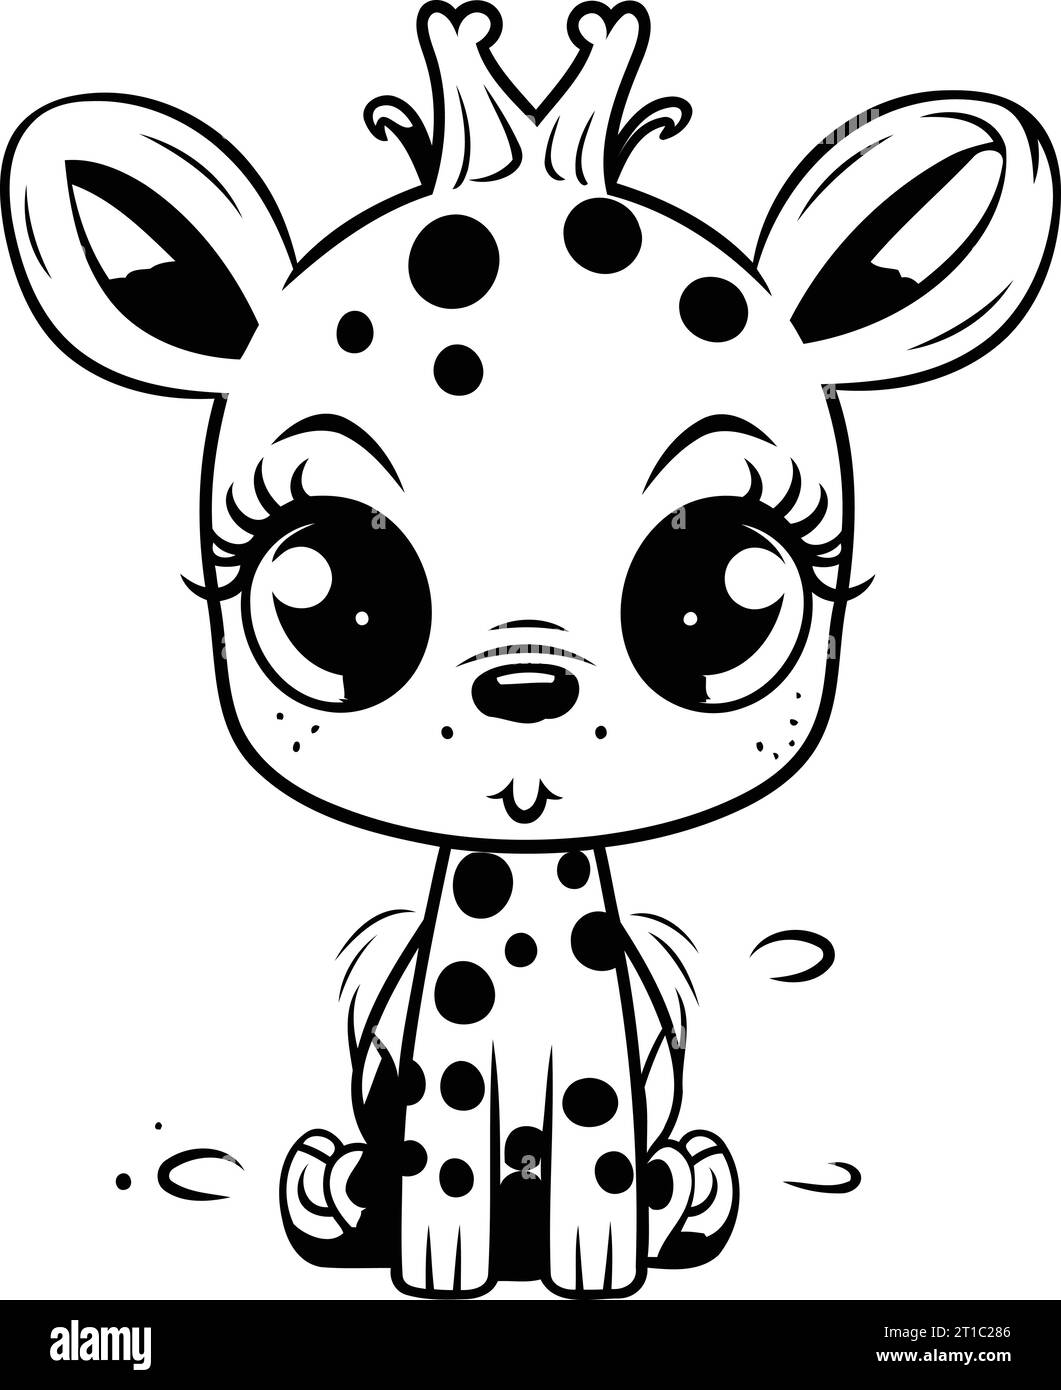 Cute baby giraffe. Vector illustration in black and white. Stock Vector